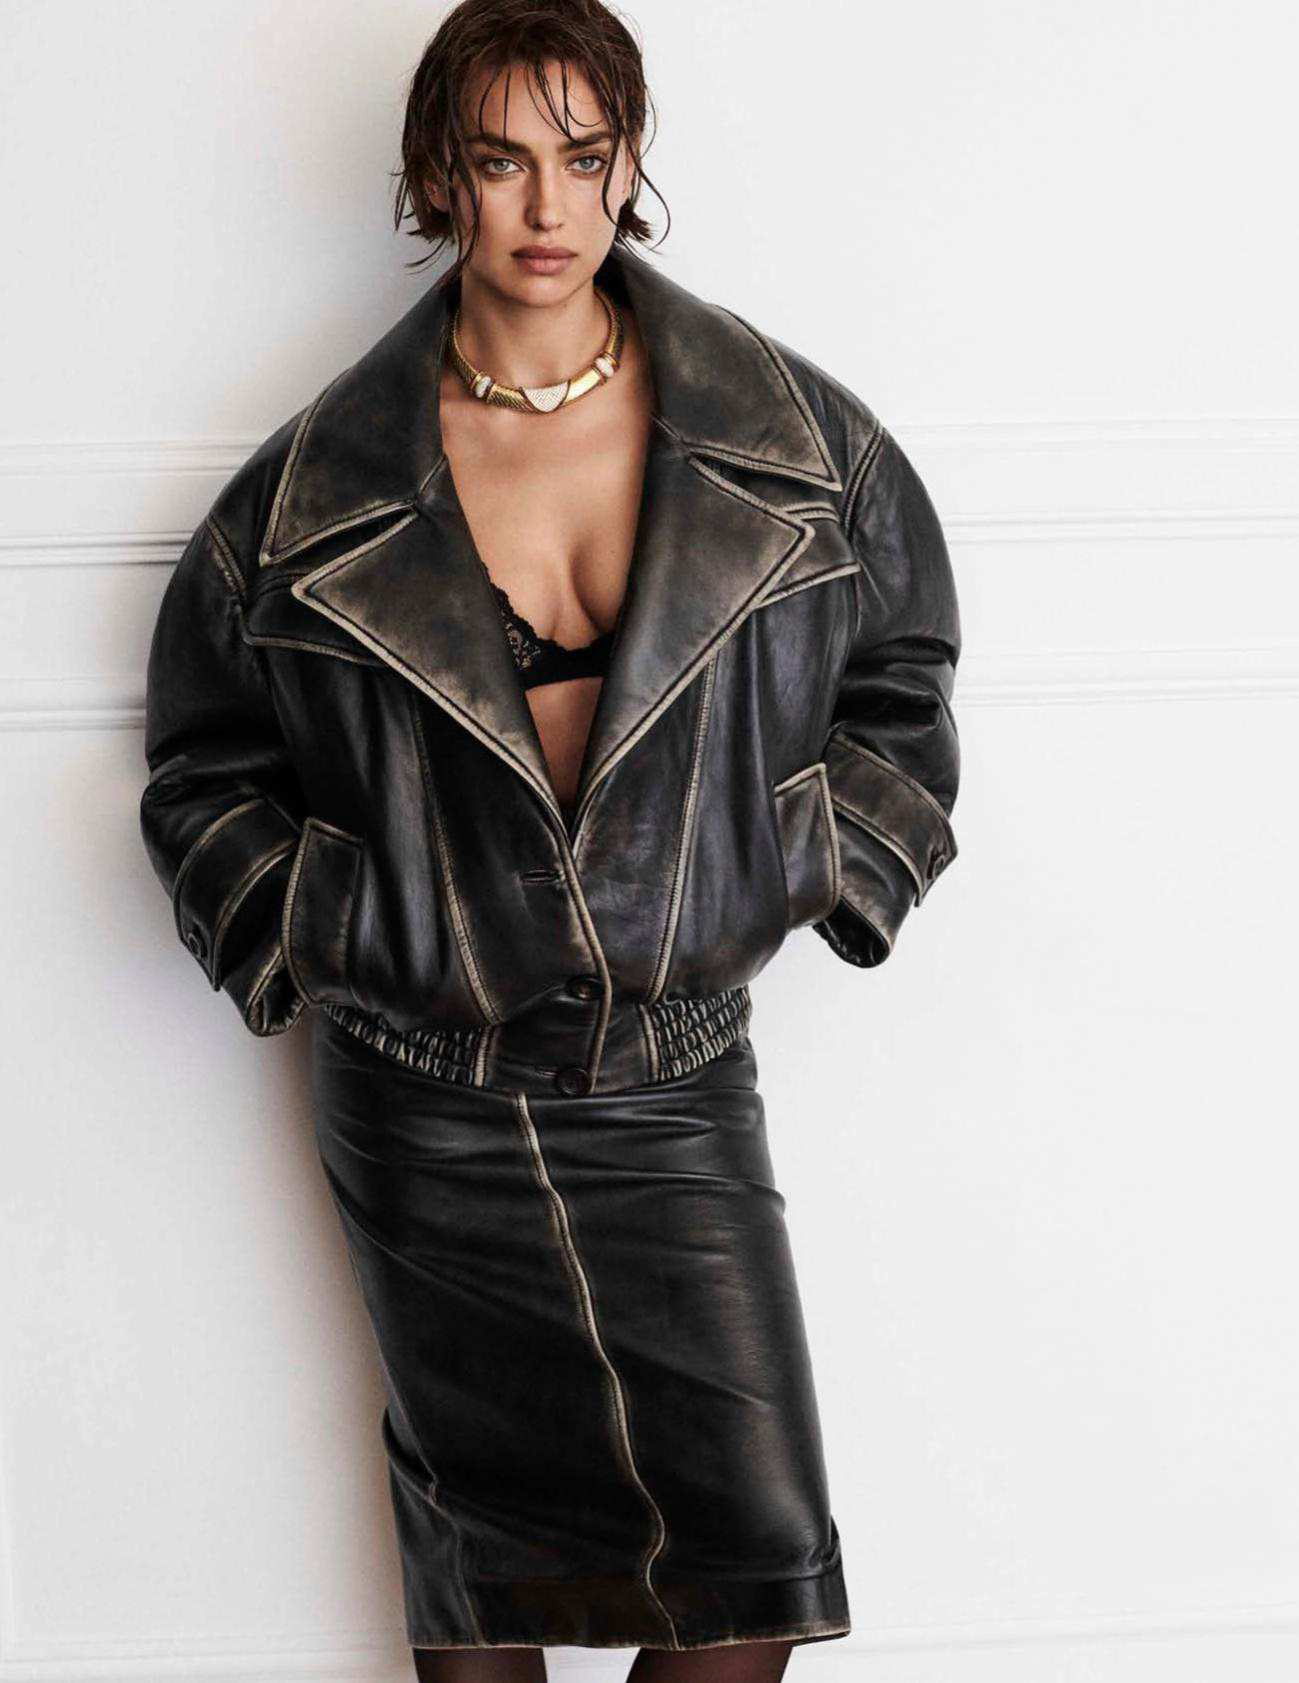 Irina Shayk by Giampaolo Sgura for Vogue Spain Sept 2018 (16).jpg